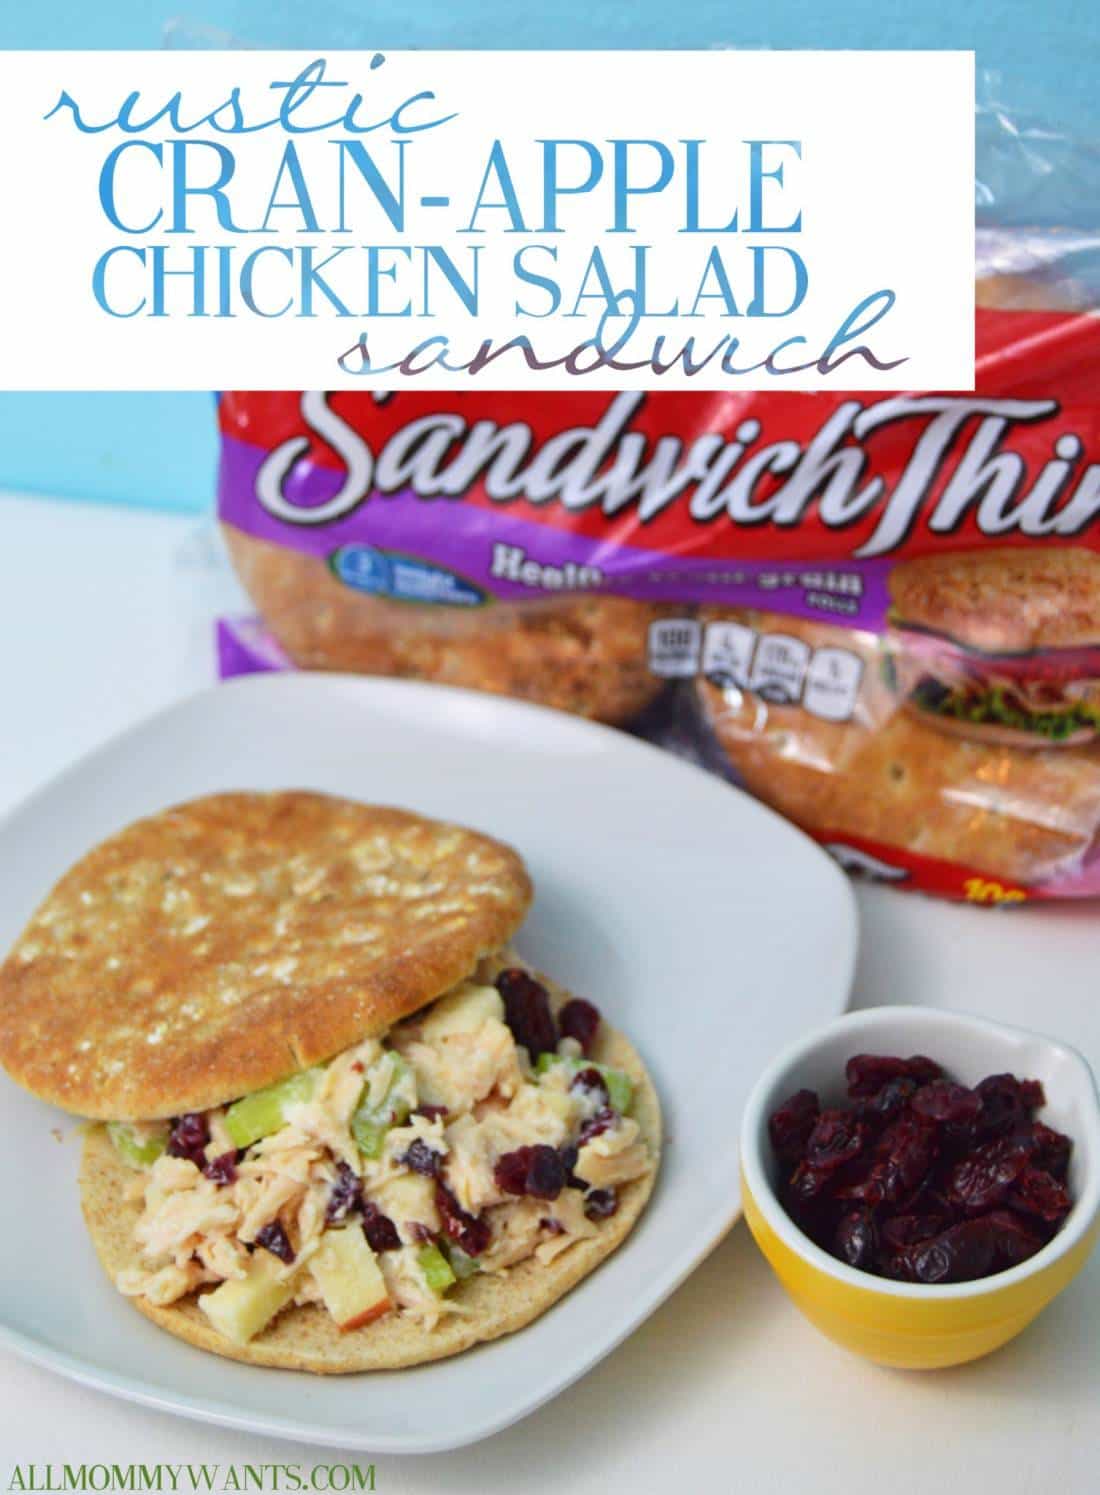 Recipe: Cran-apple Chicken Salad Sandwich